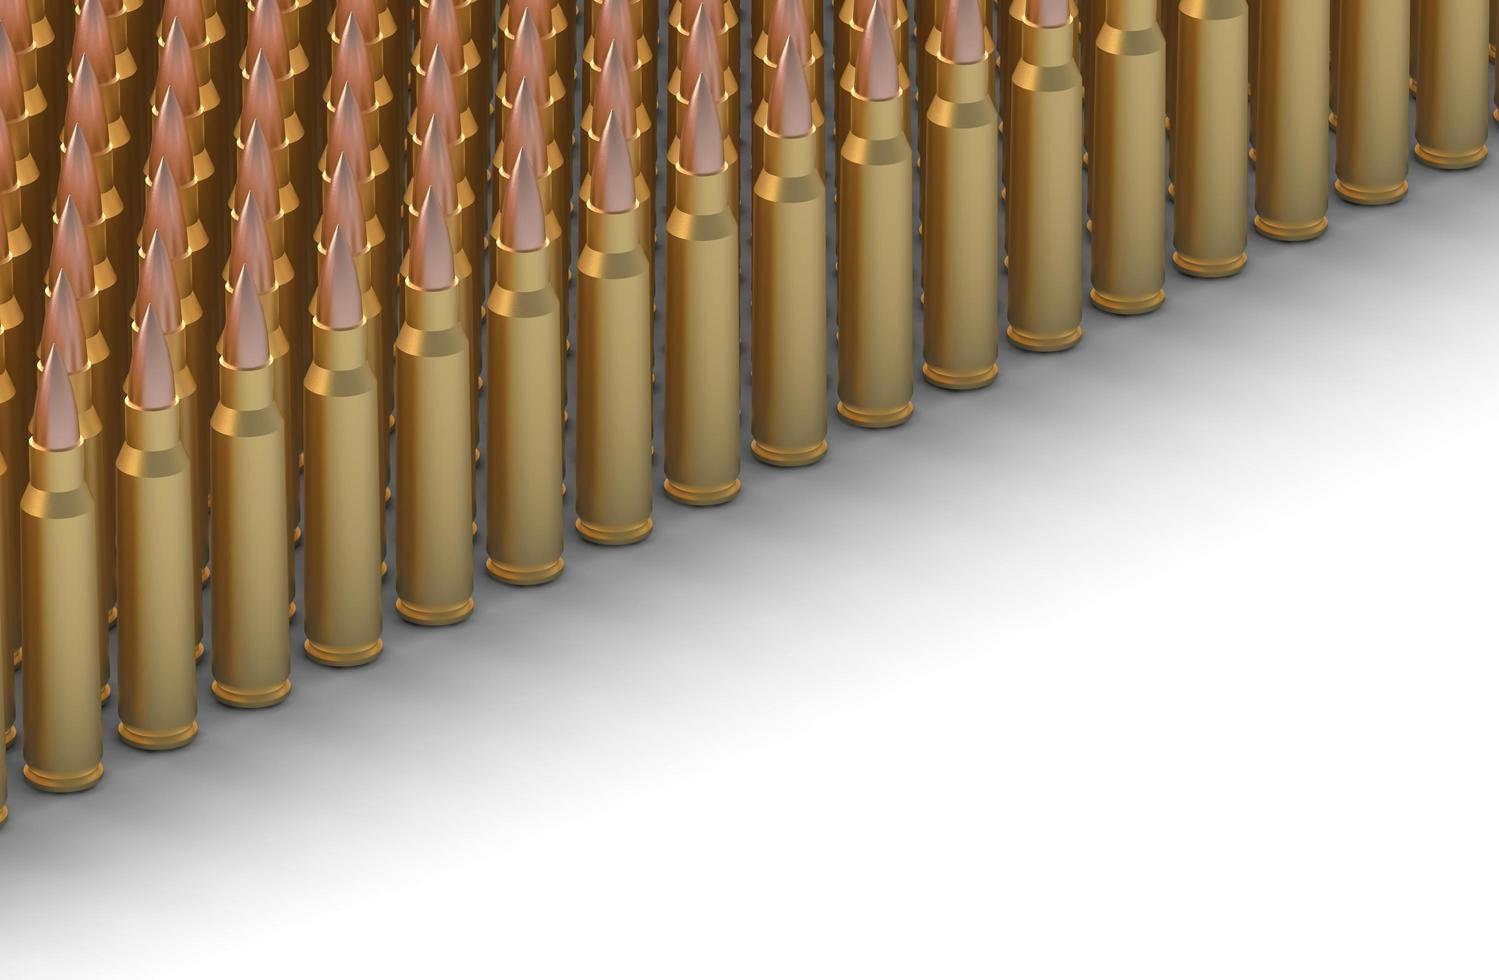 50 cal bullets 3d illustration photo